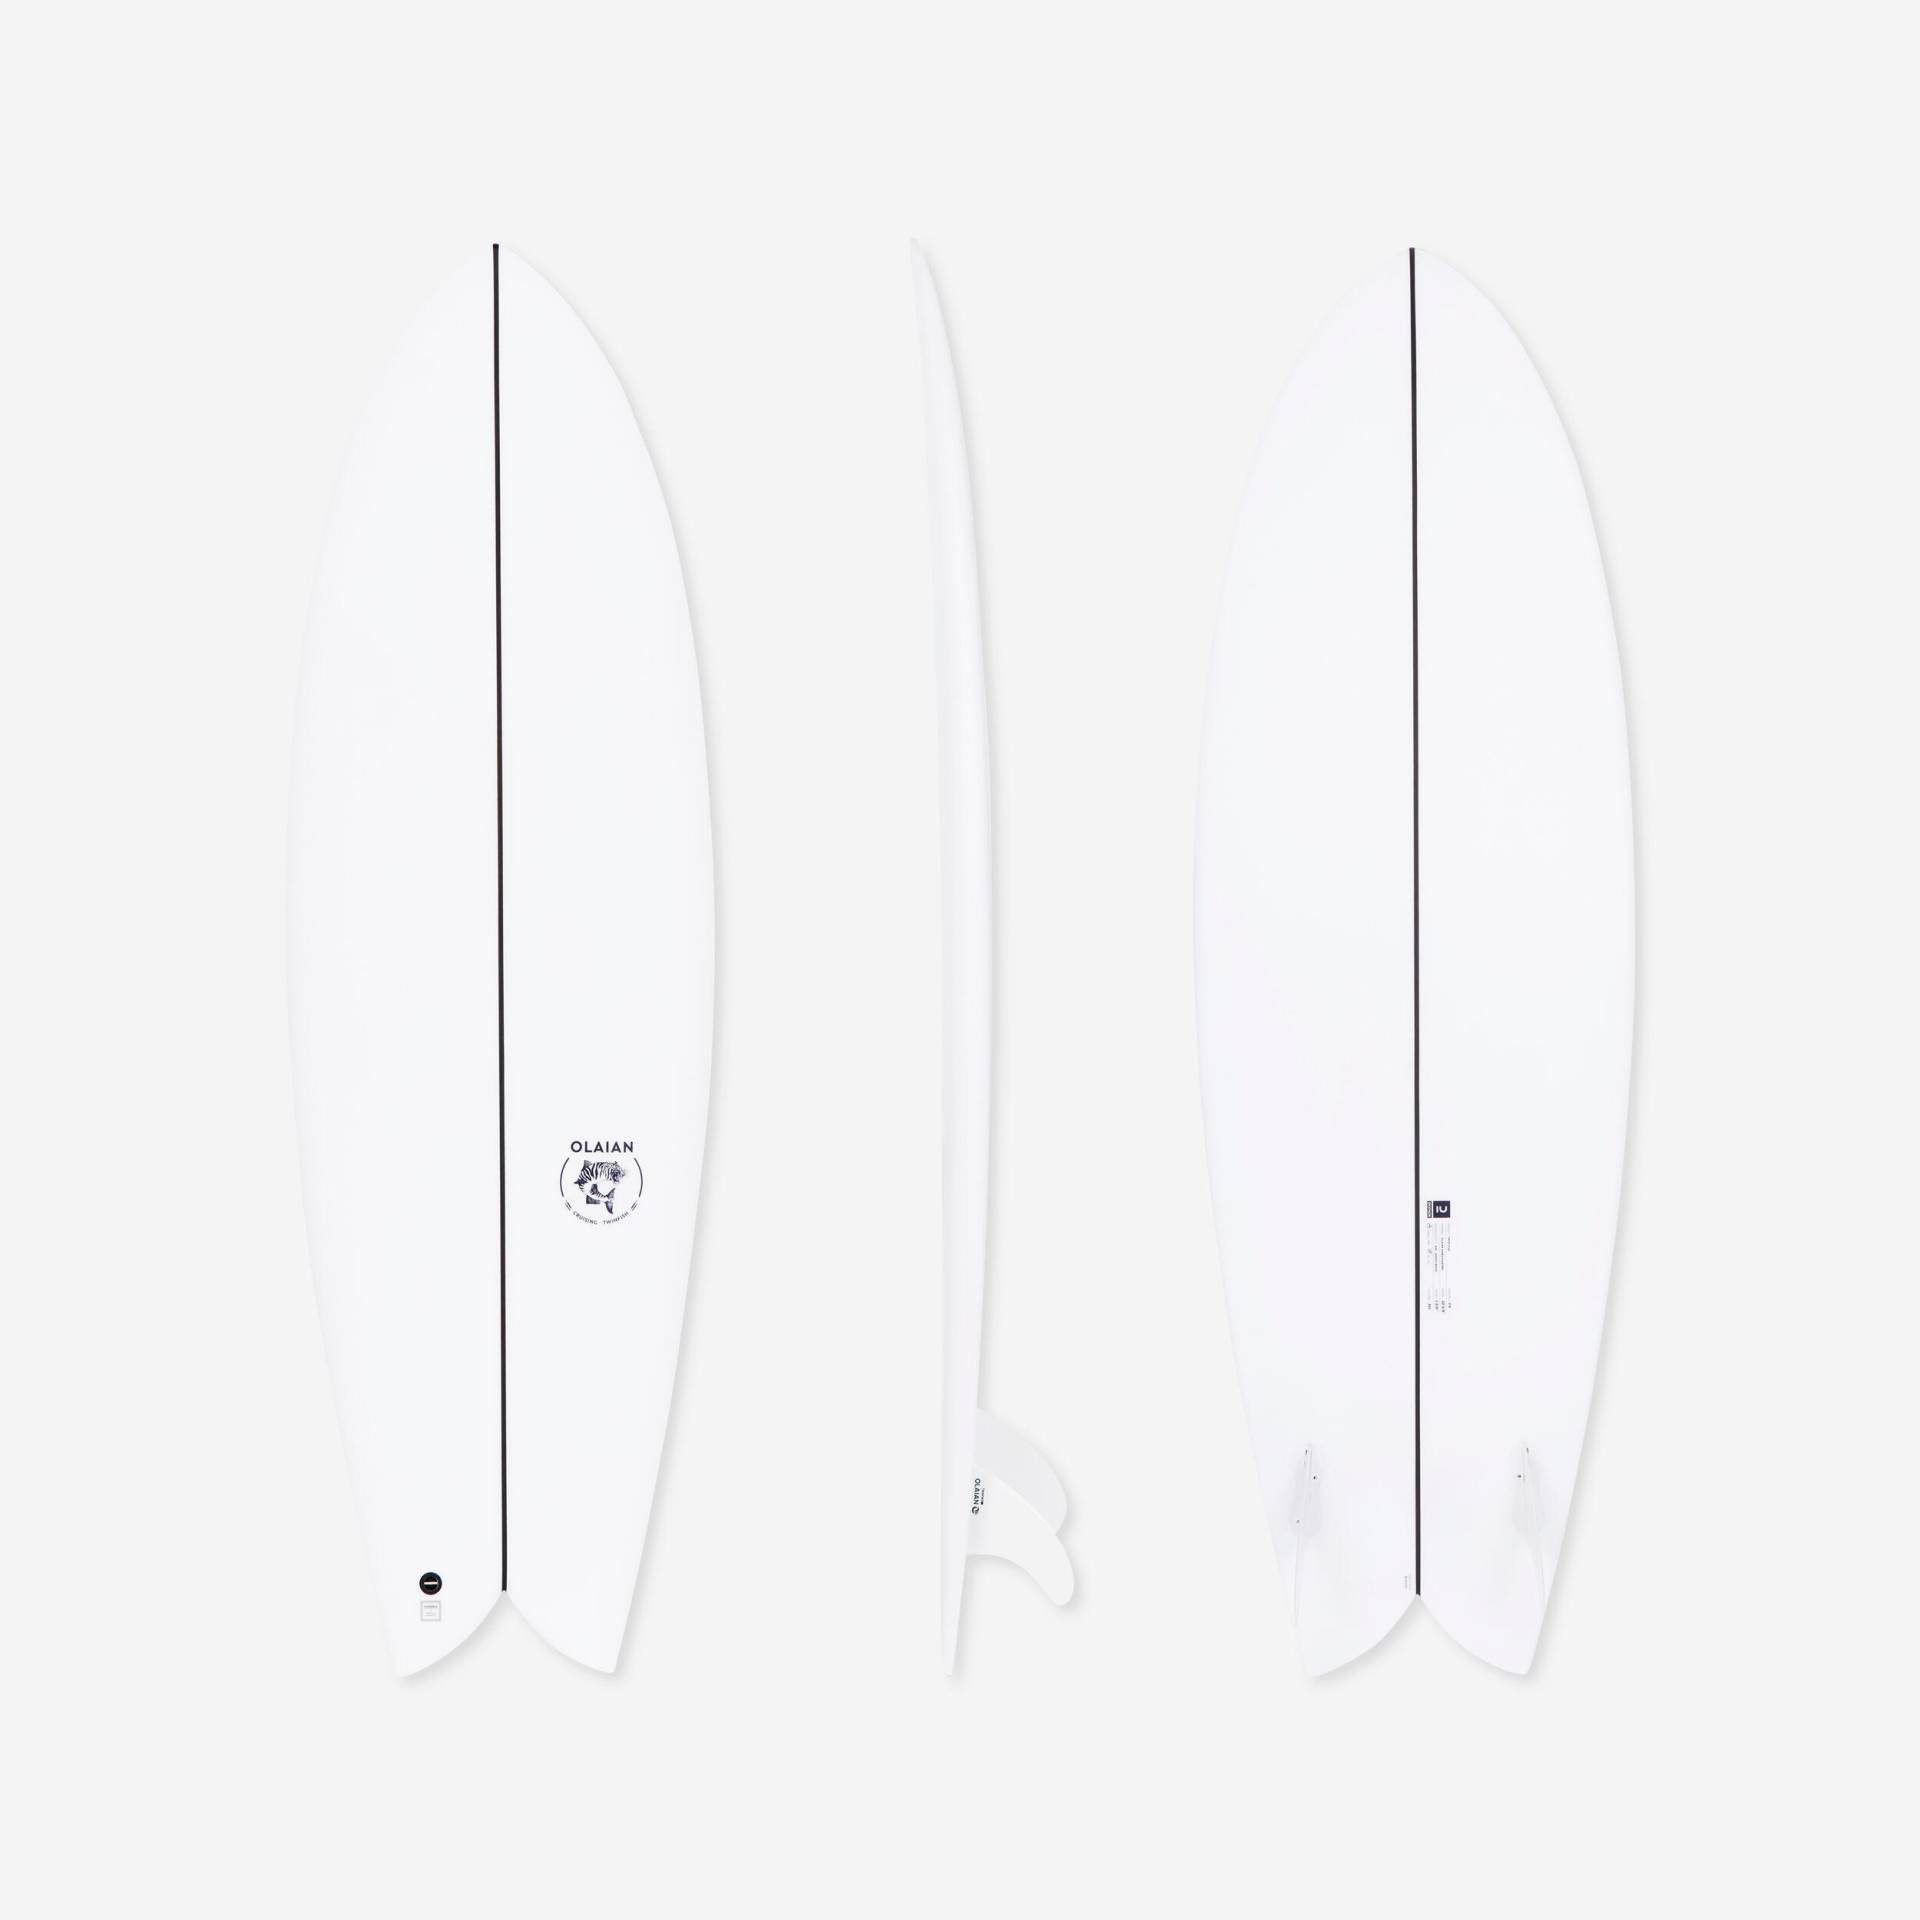 Surfboard 35 l 5'8 Zoll mit 2 Twin-Finnen - Fish 900 von OLAIAN